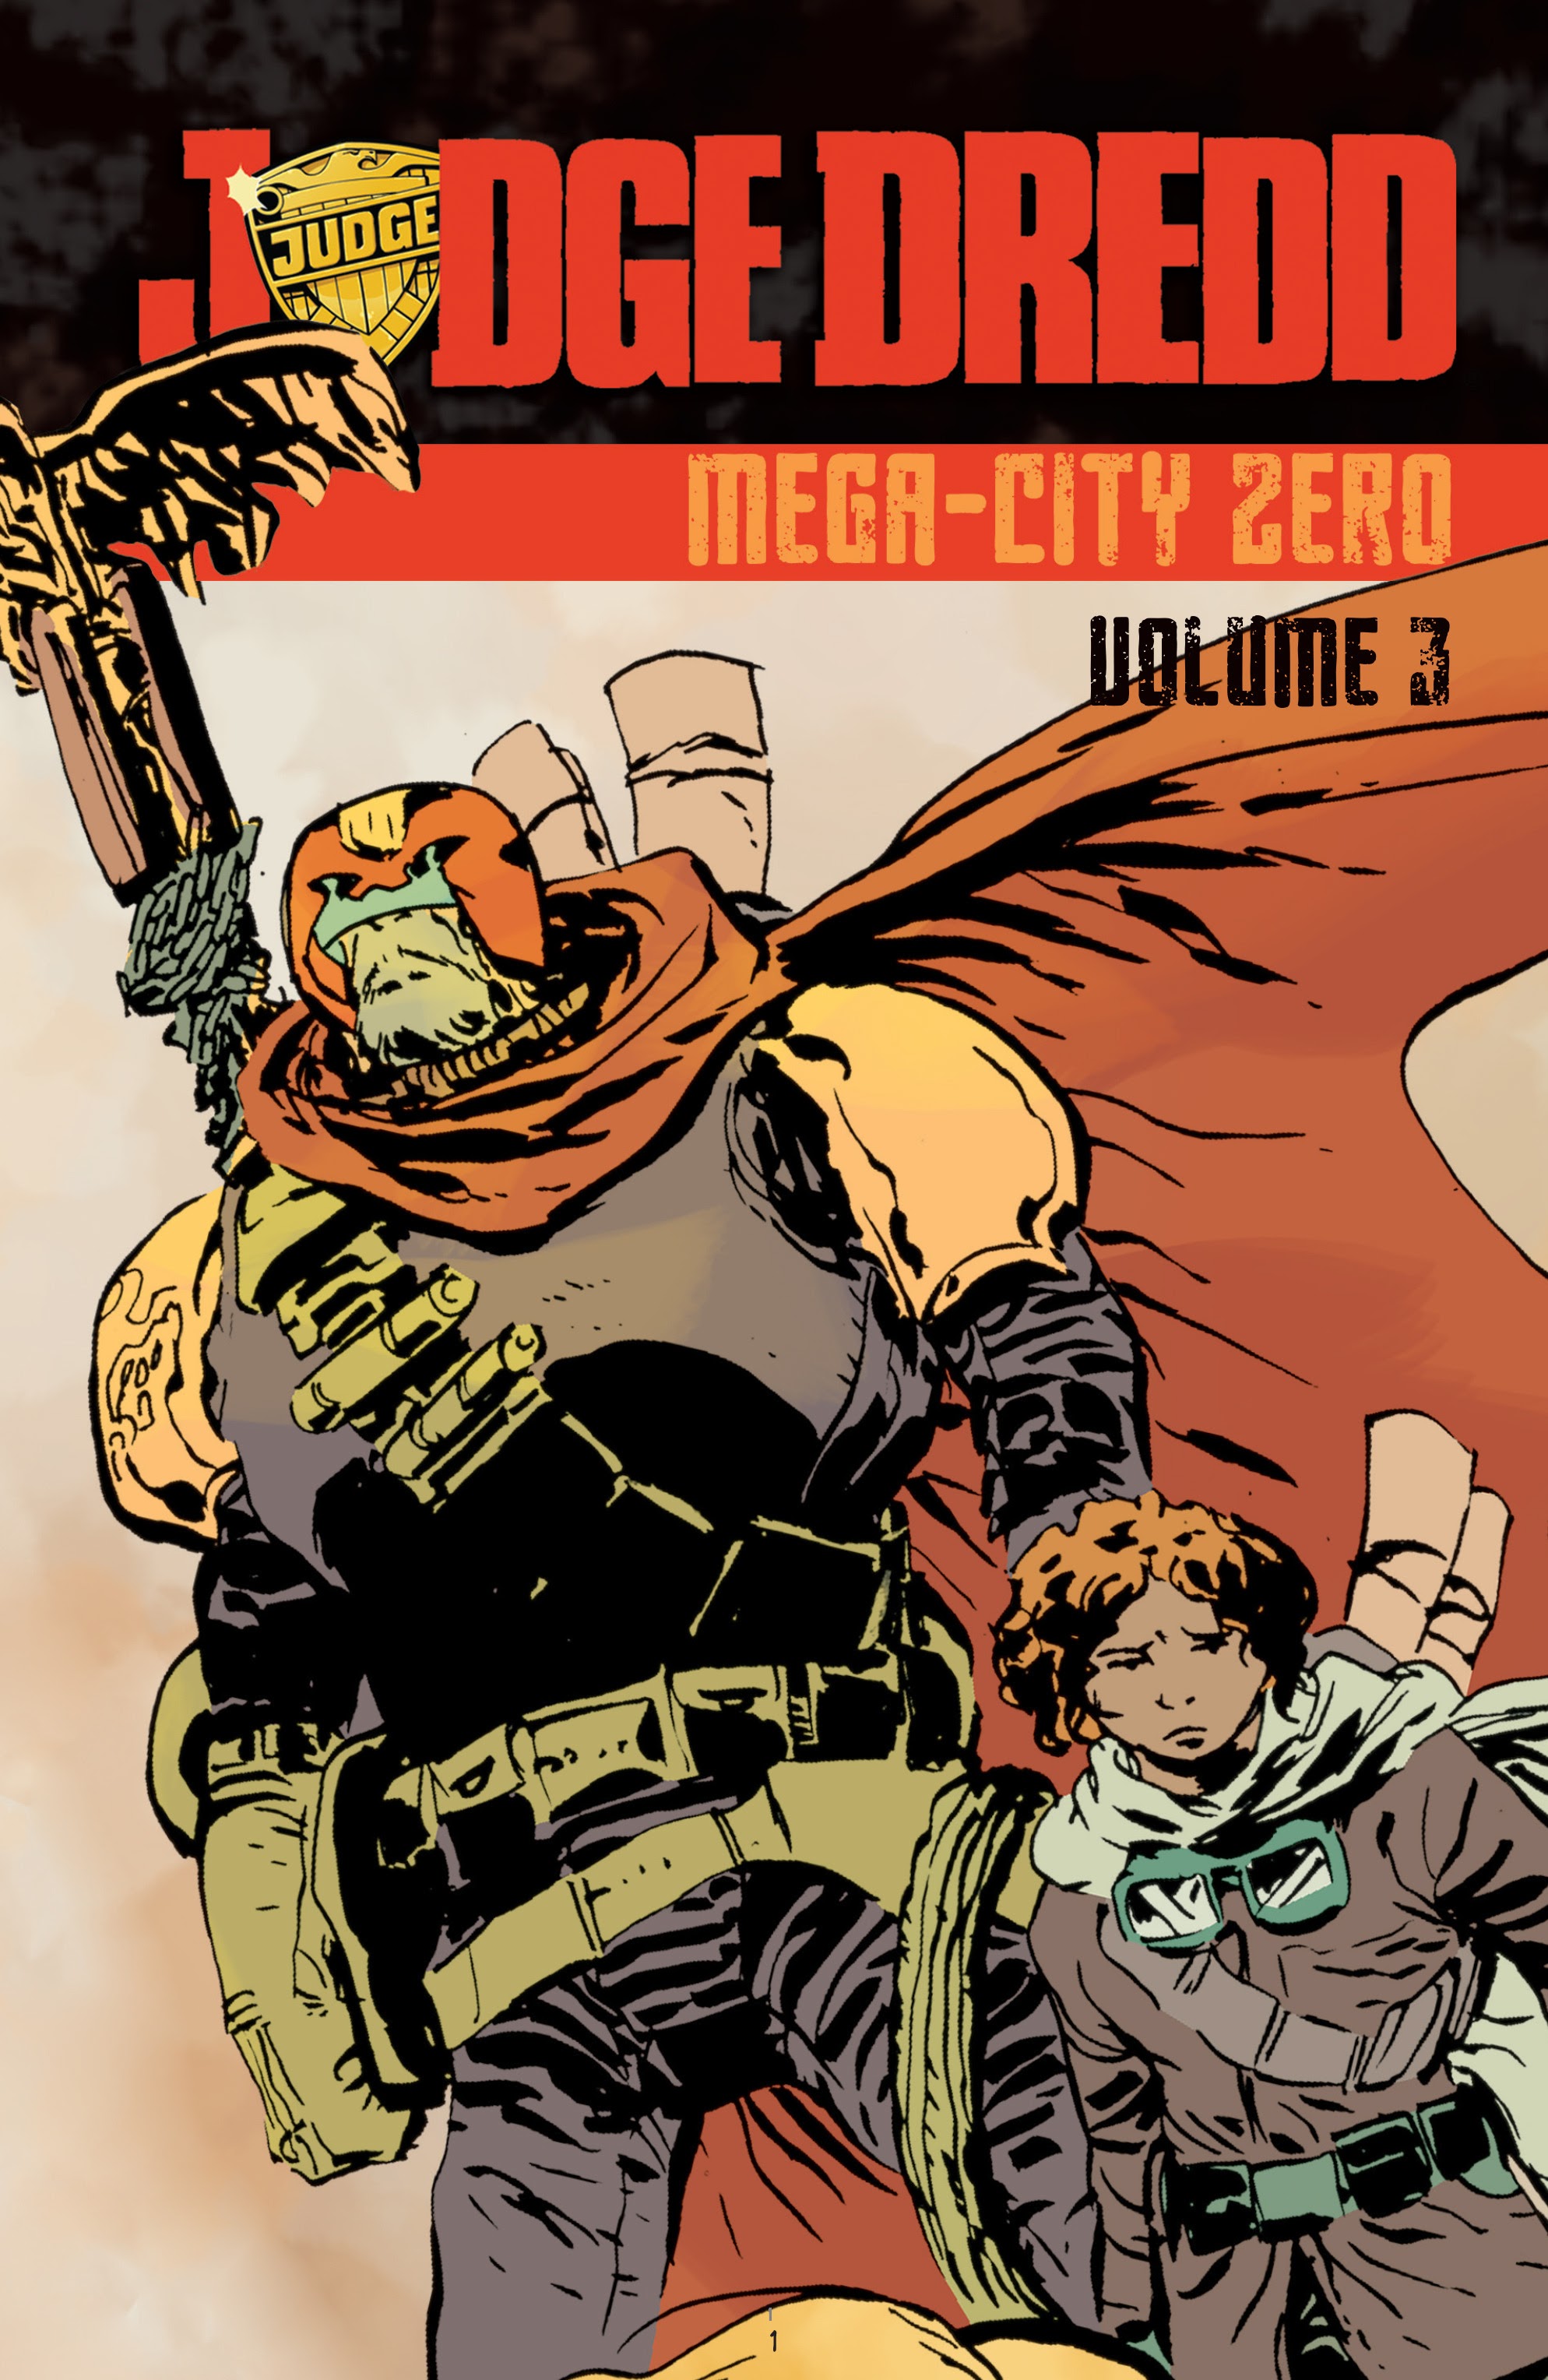 Read online Judge Dredd: Mega-City Zero comic -  Issue # TPB 3 - 2